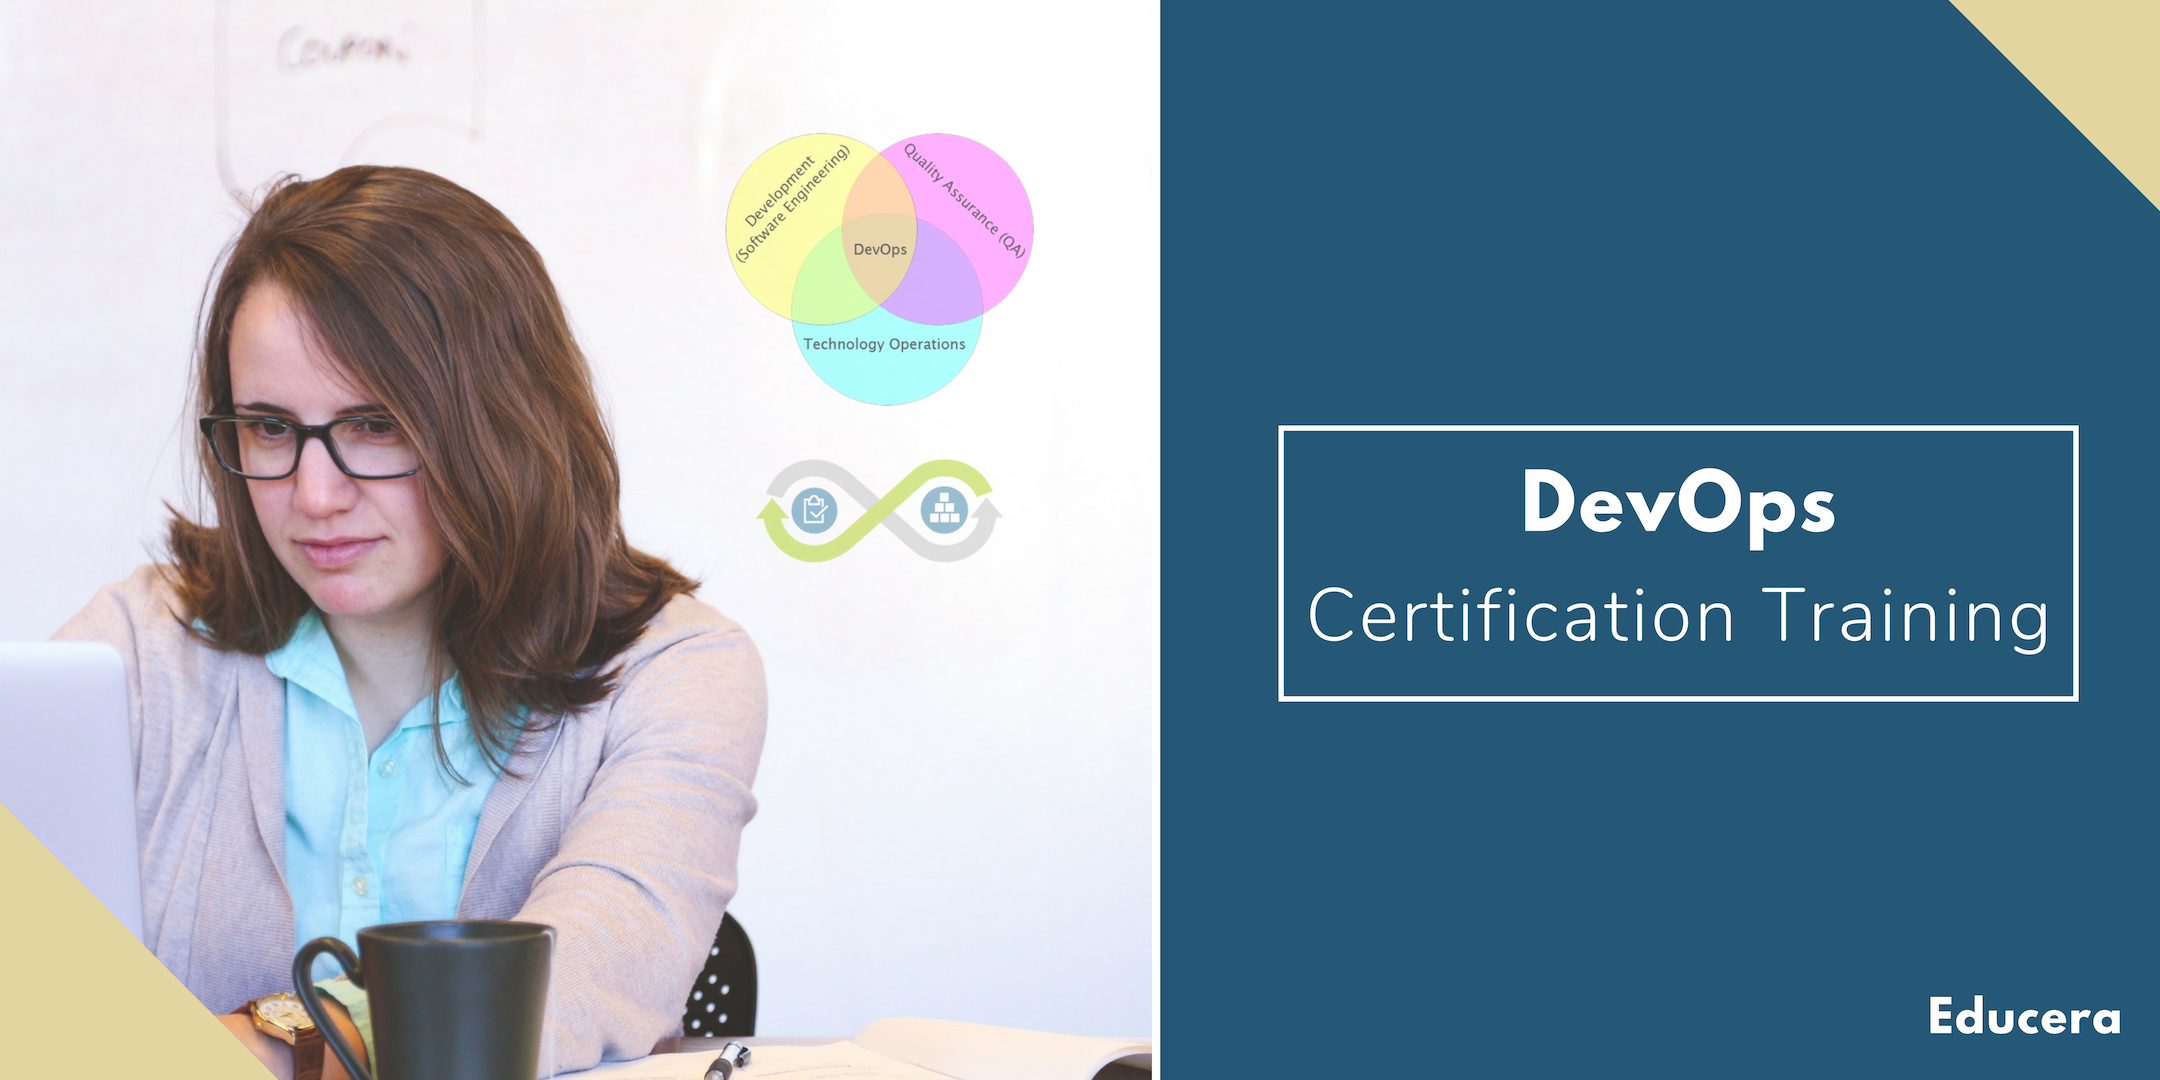 Devops Certification Training in Tampa, FL